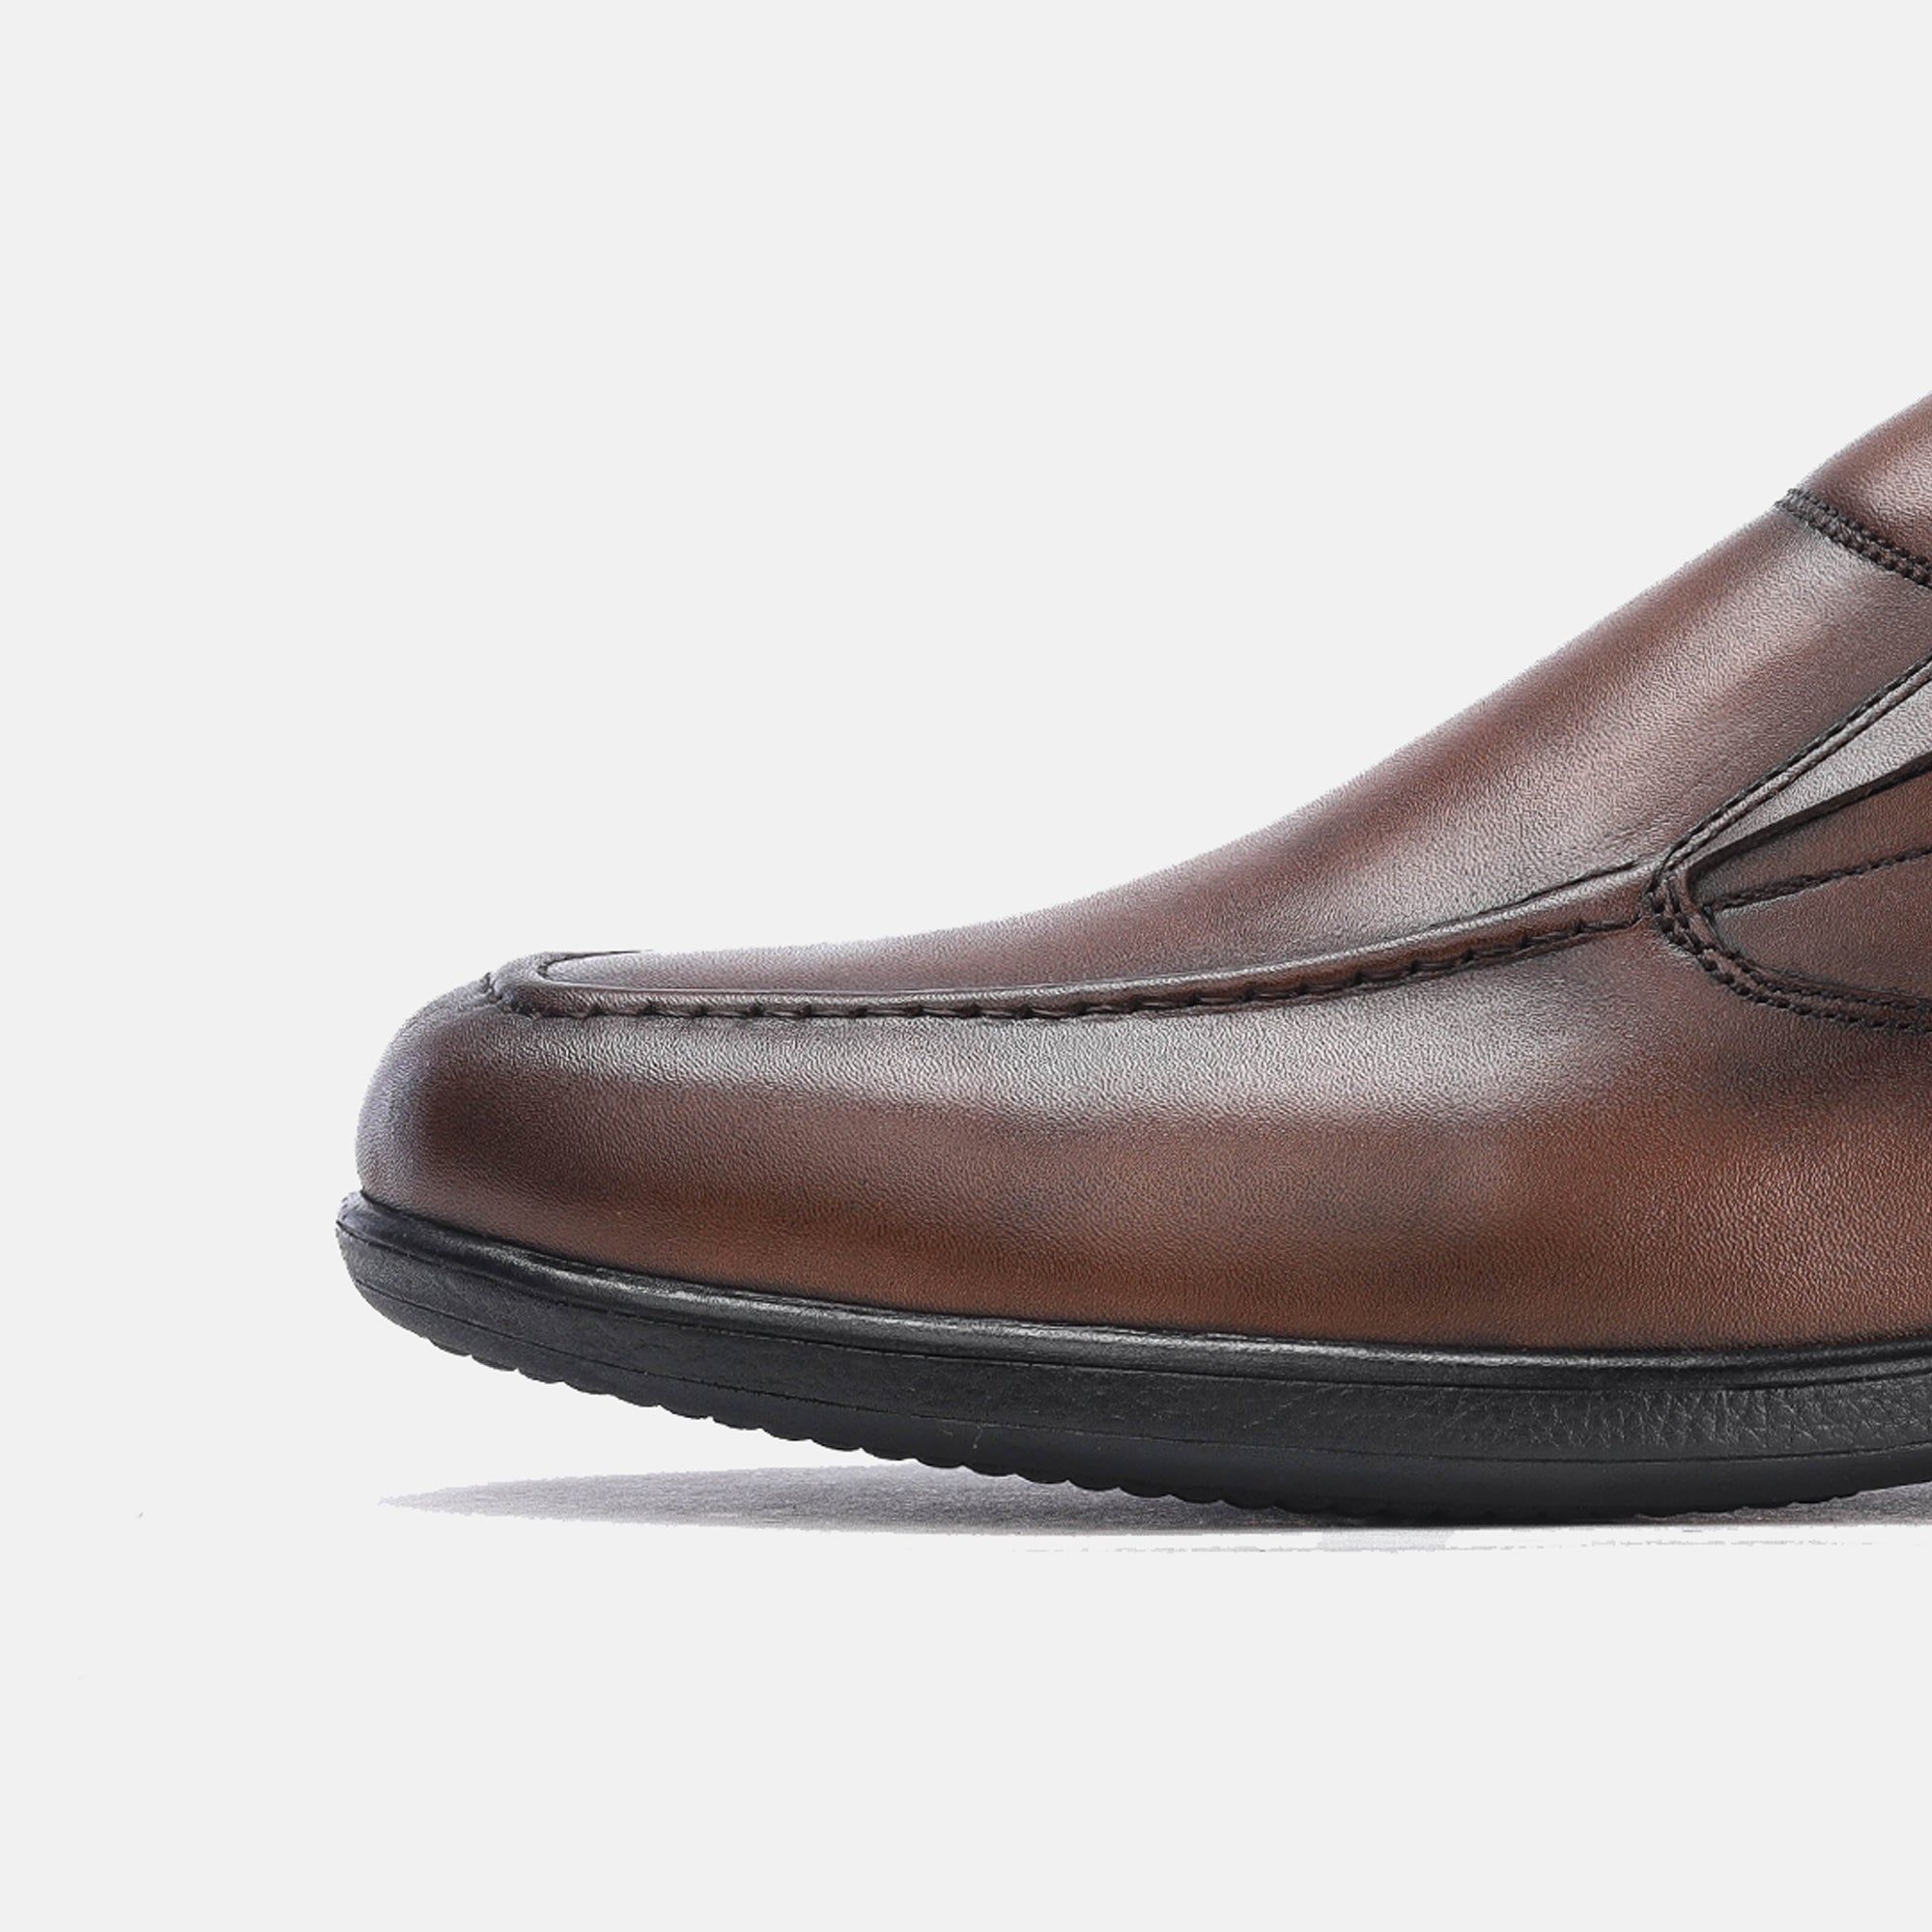 '5163 chaussure cuir marron vintage